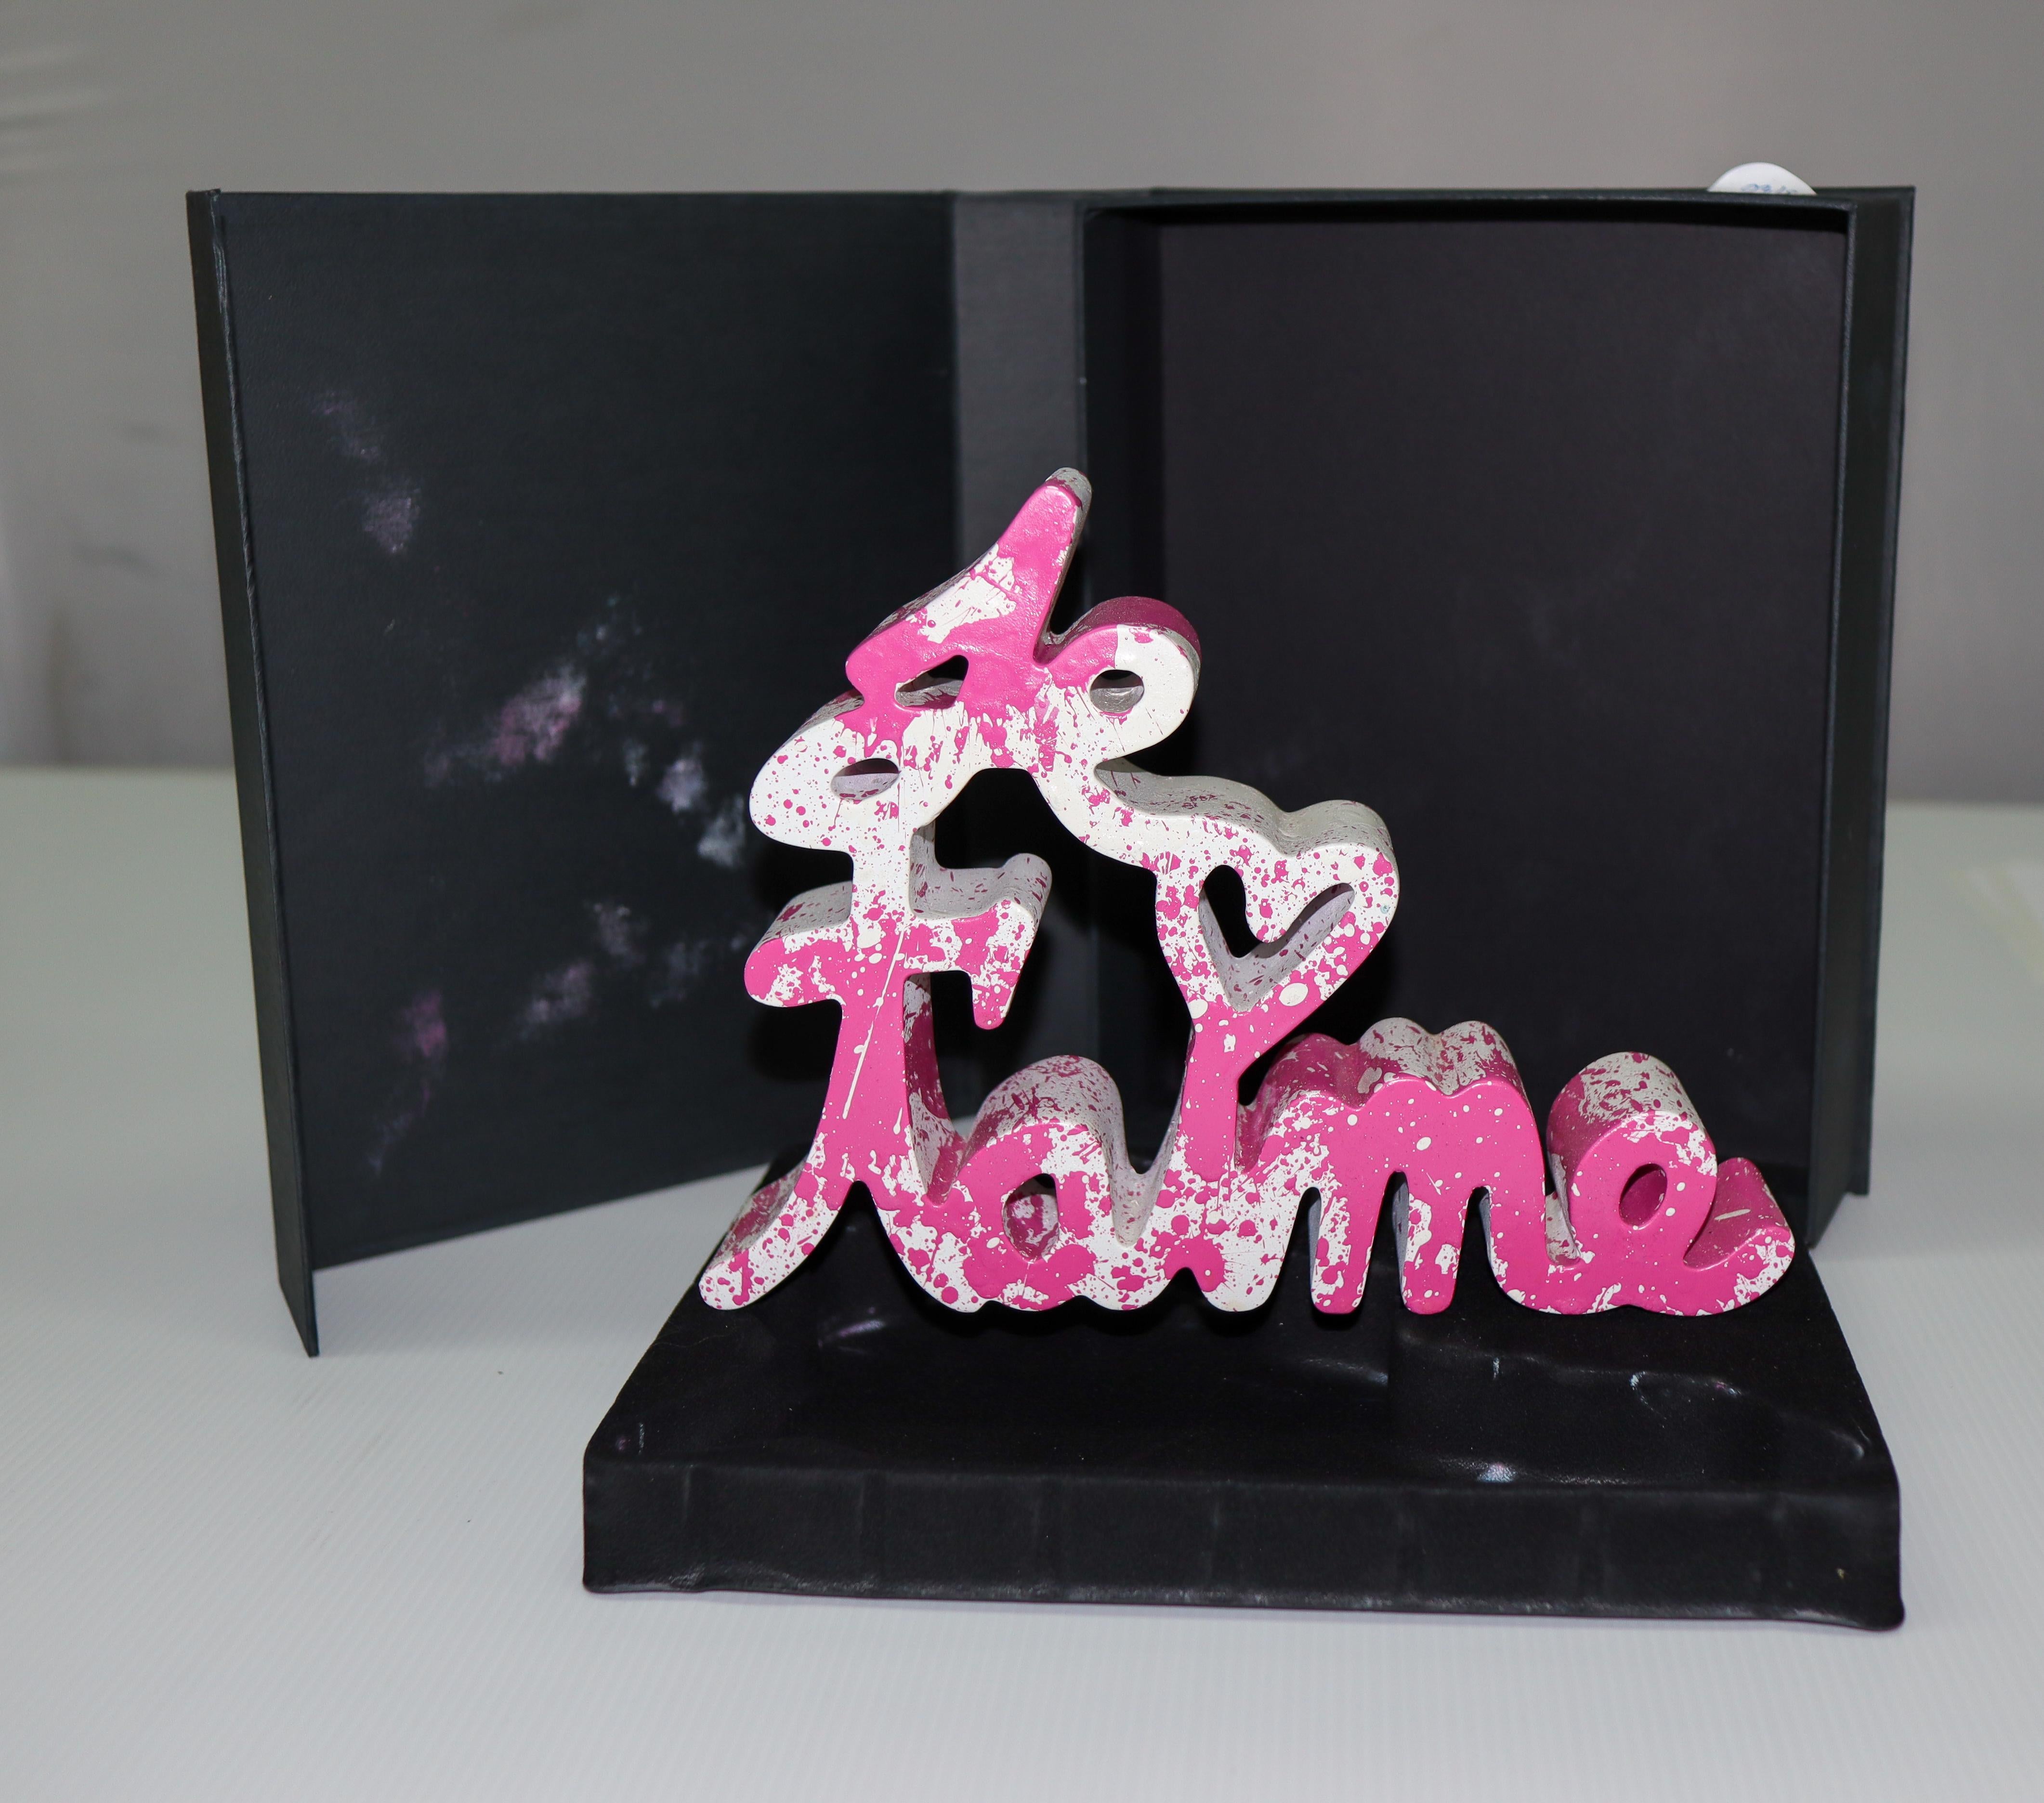 Je T'aime (Pink Splash) - Sculpture by Mr Brainwash